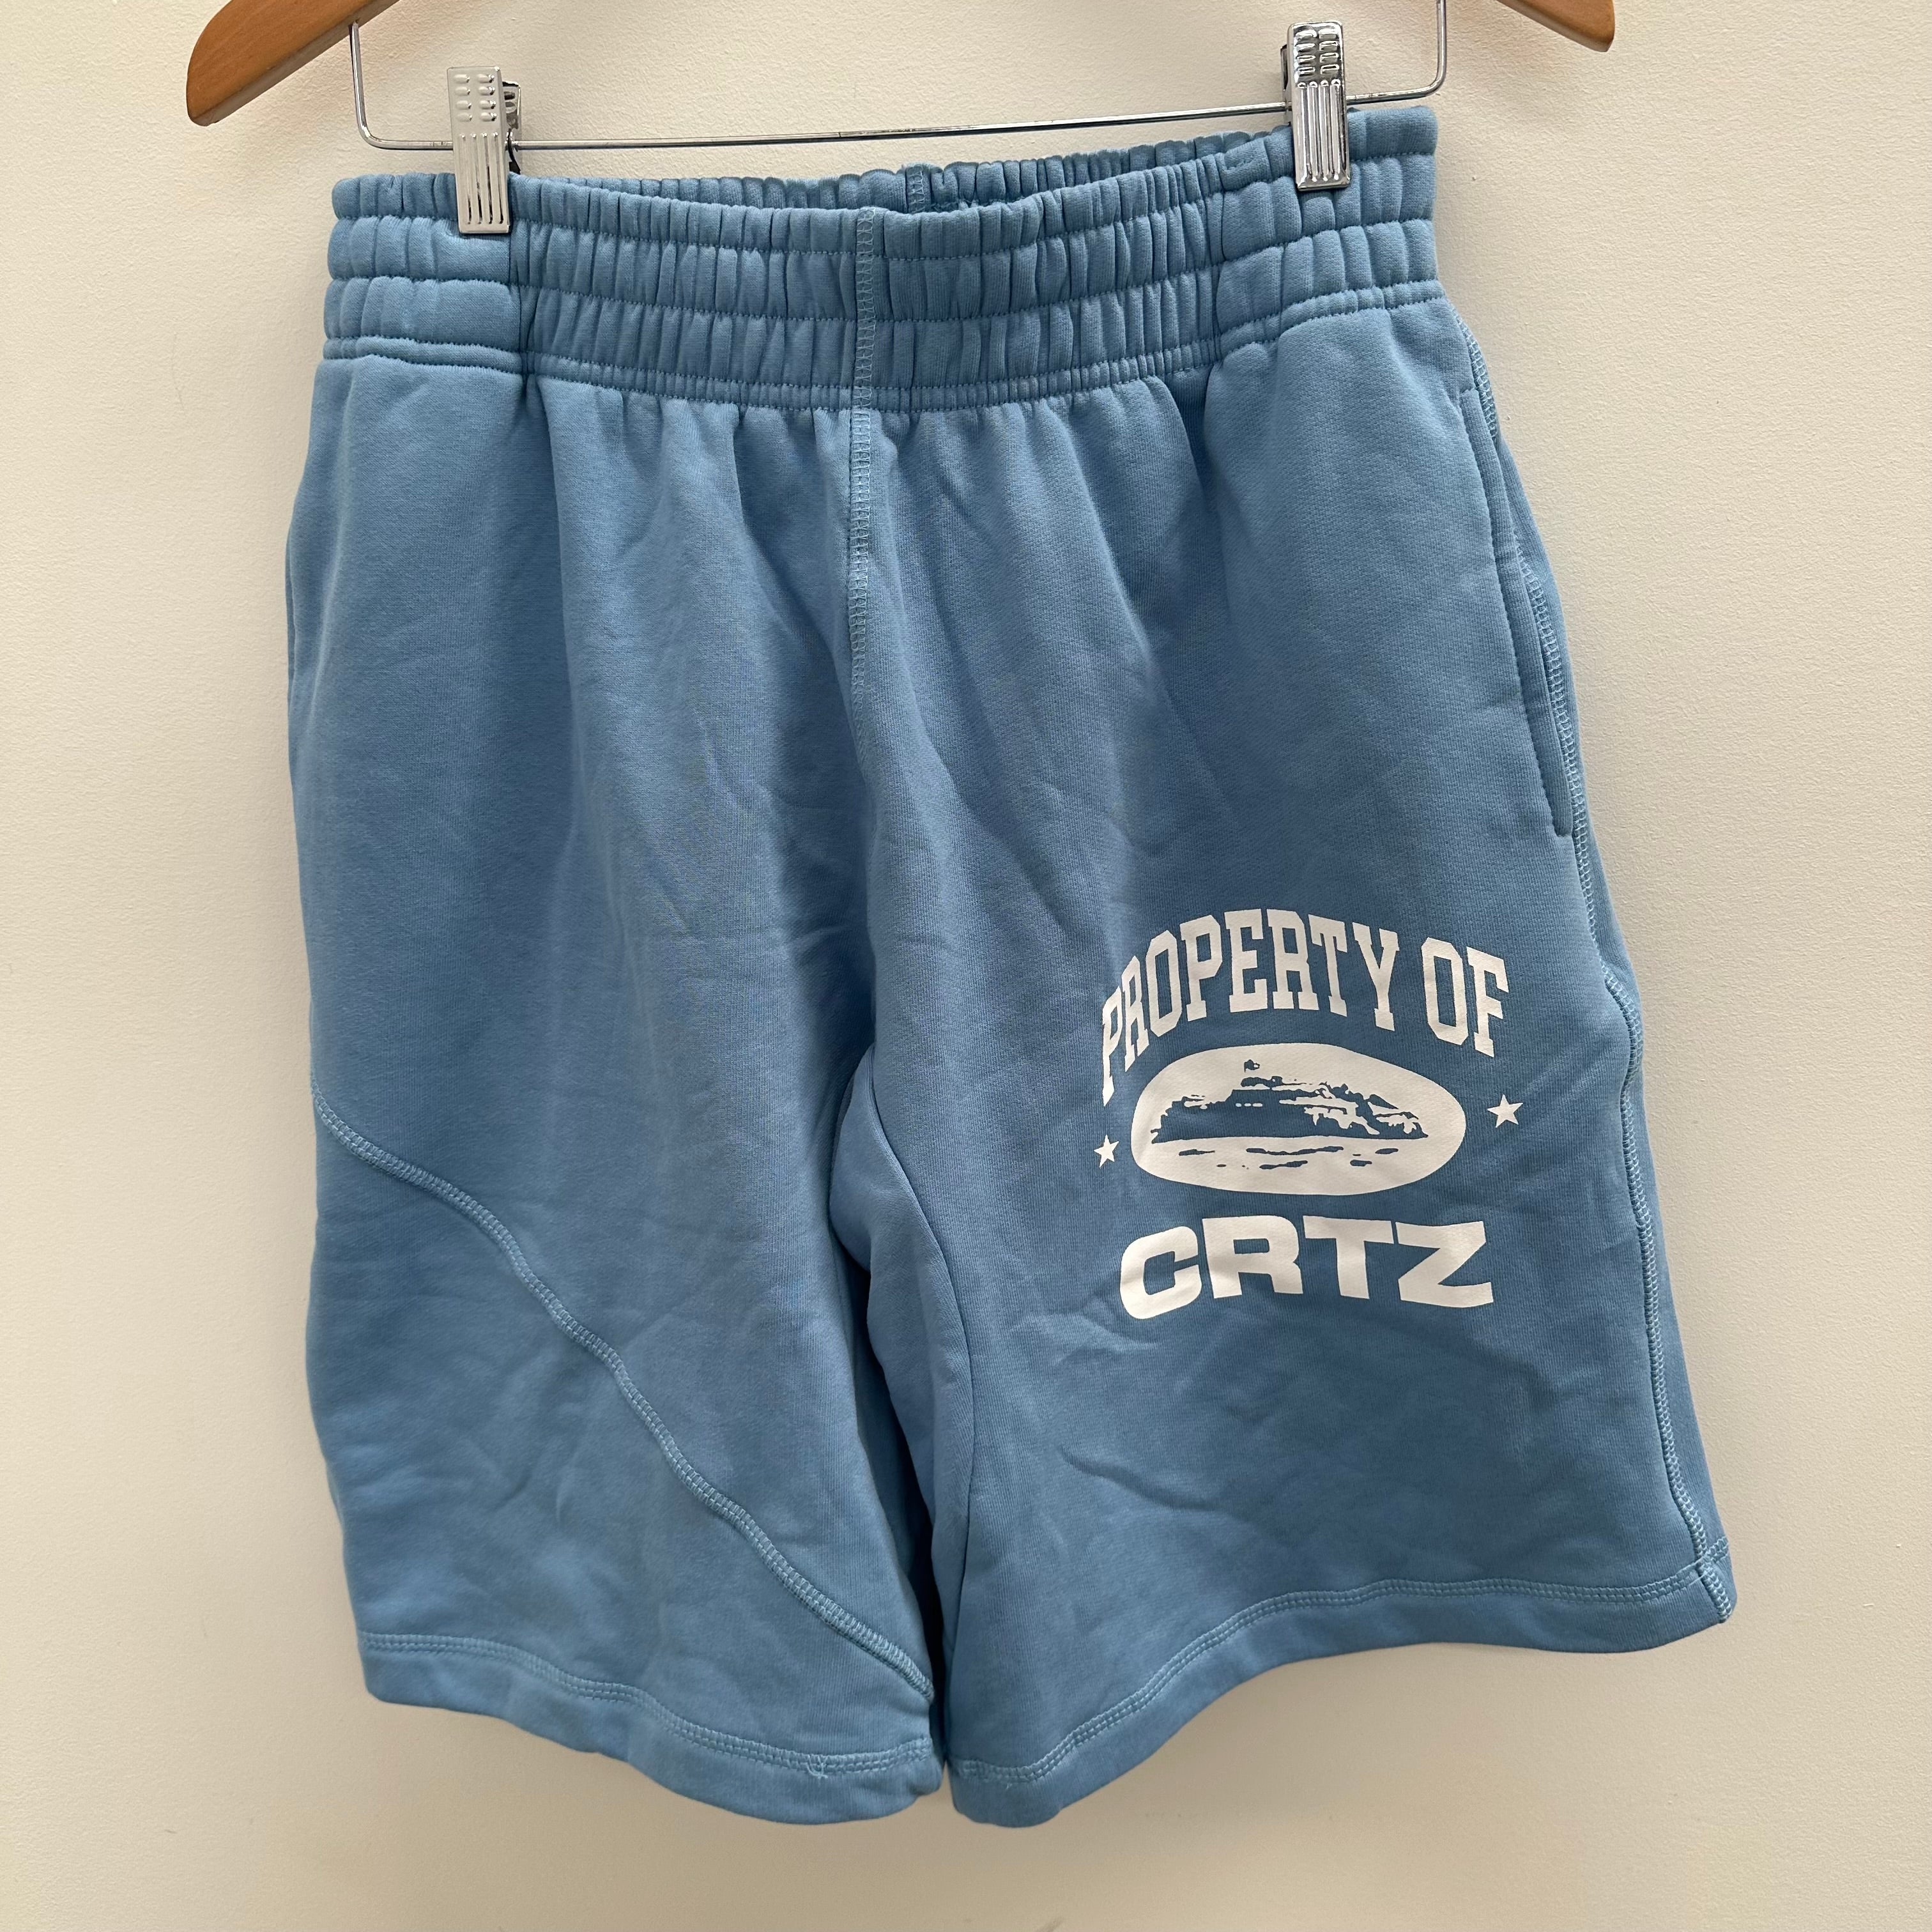 Corteiz Property of Corteiz Shorts Blue (Size L)